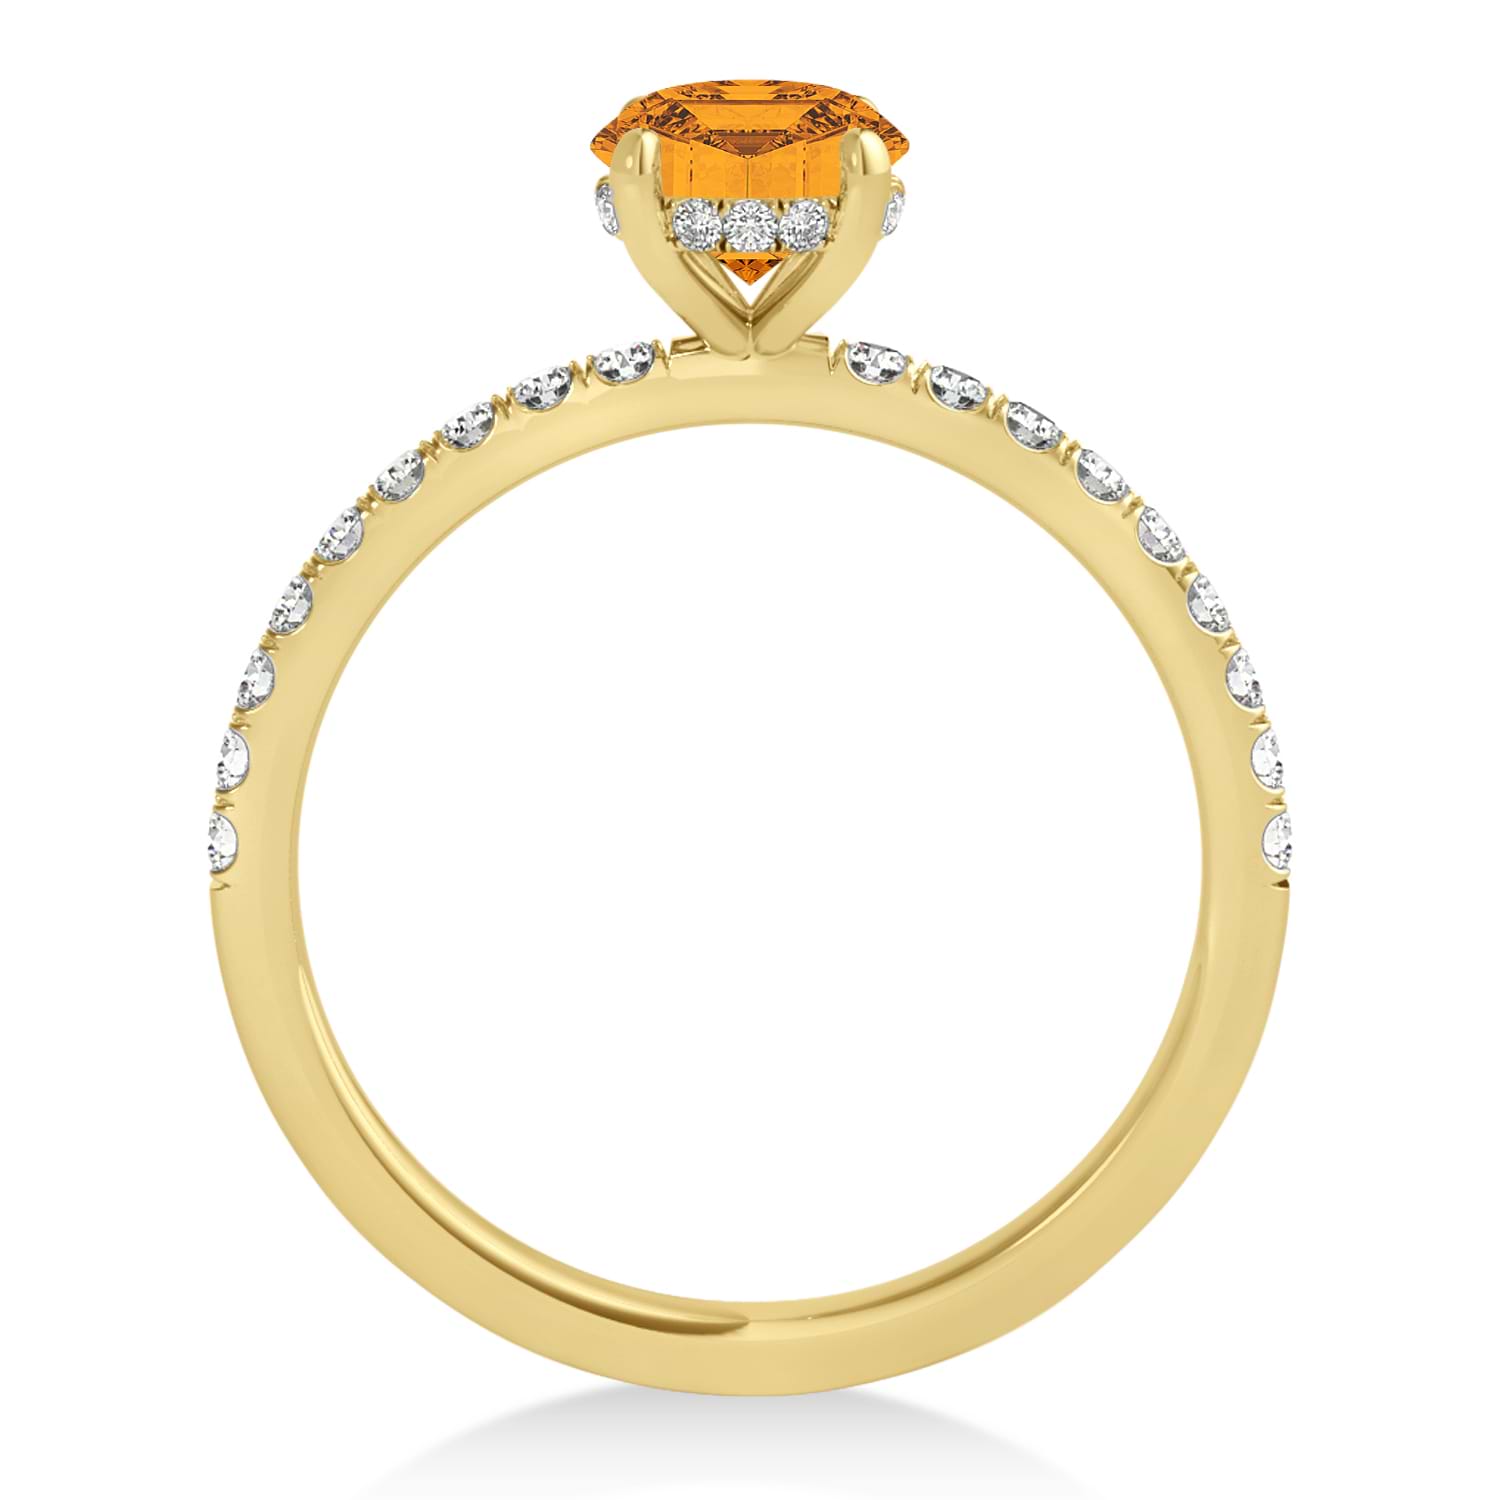 Round Citrine & Diamond Single Row Hidden Halo Engagement Ring 14k Yellow Gold (1.25ct)